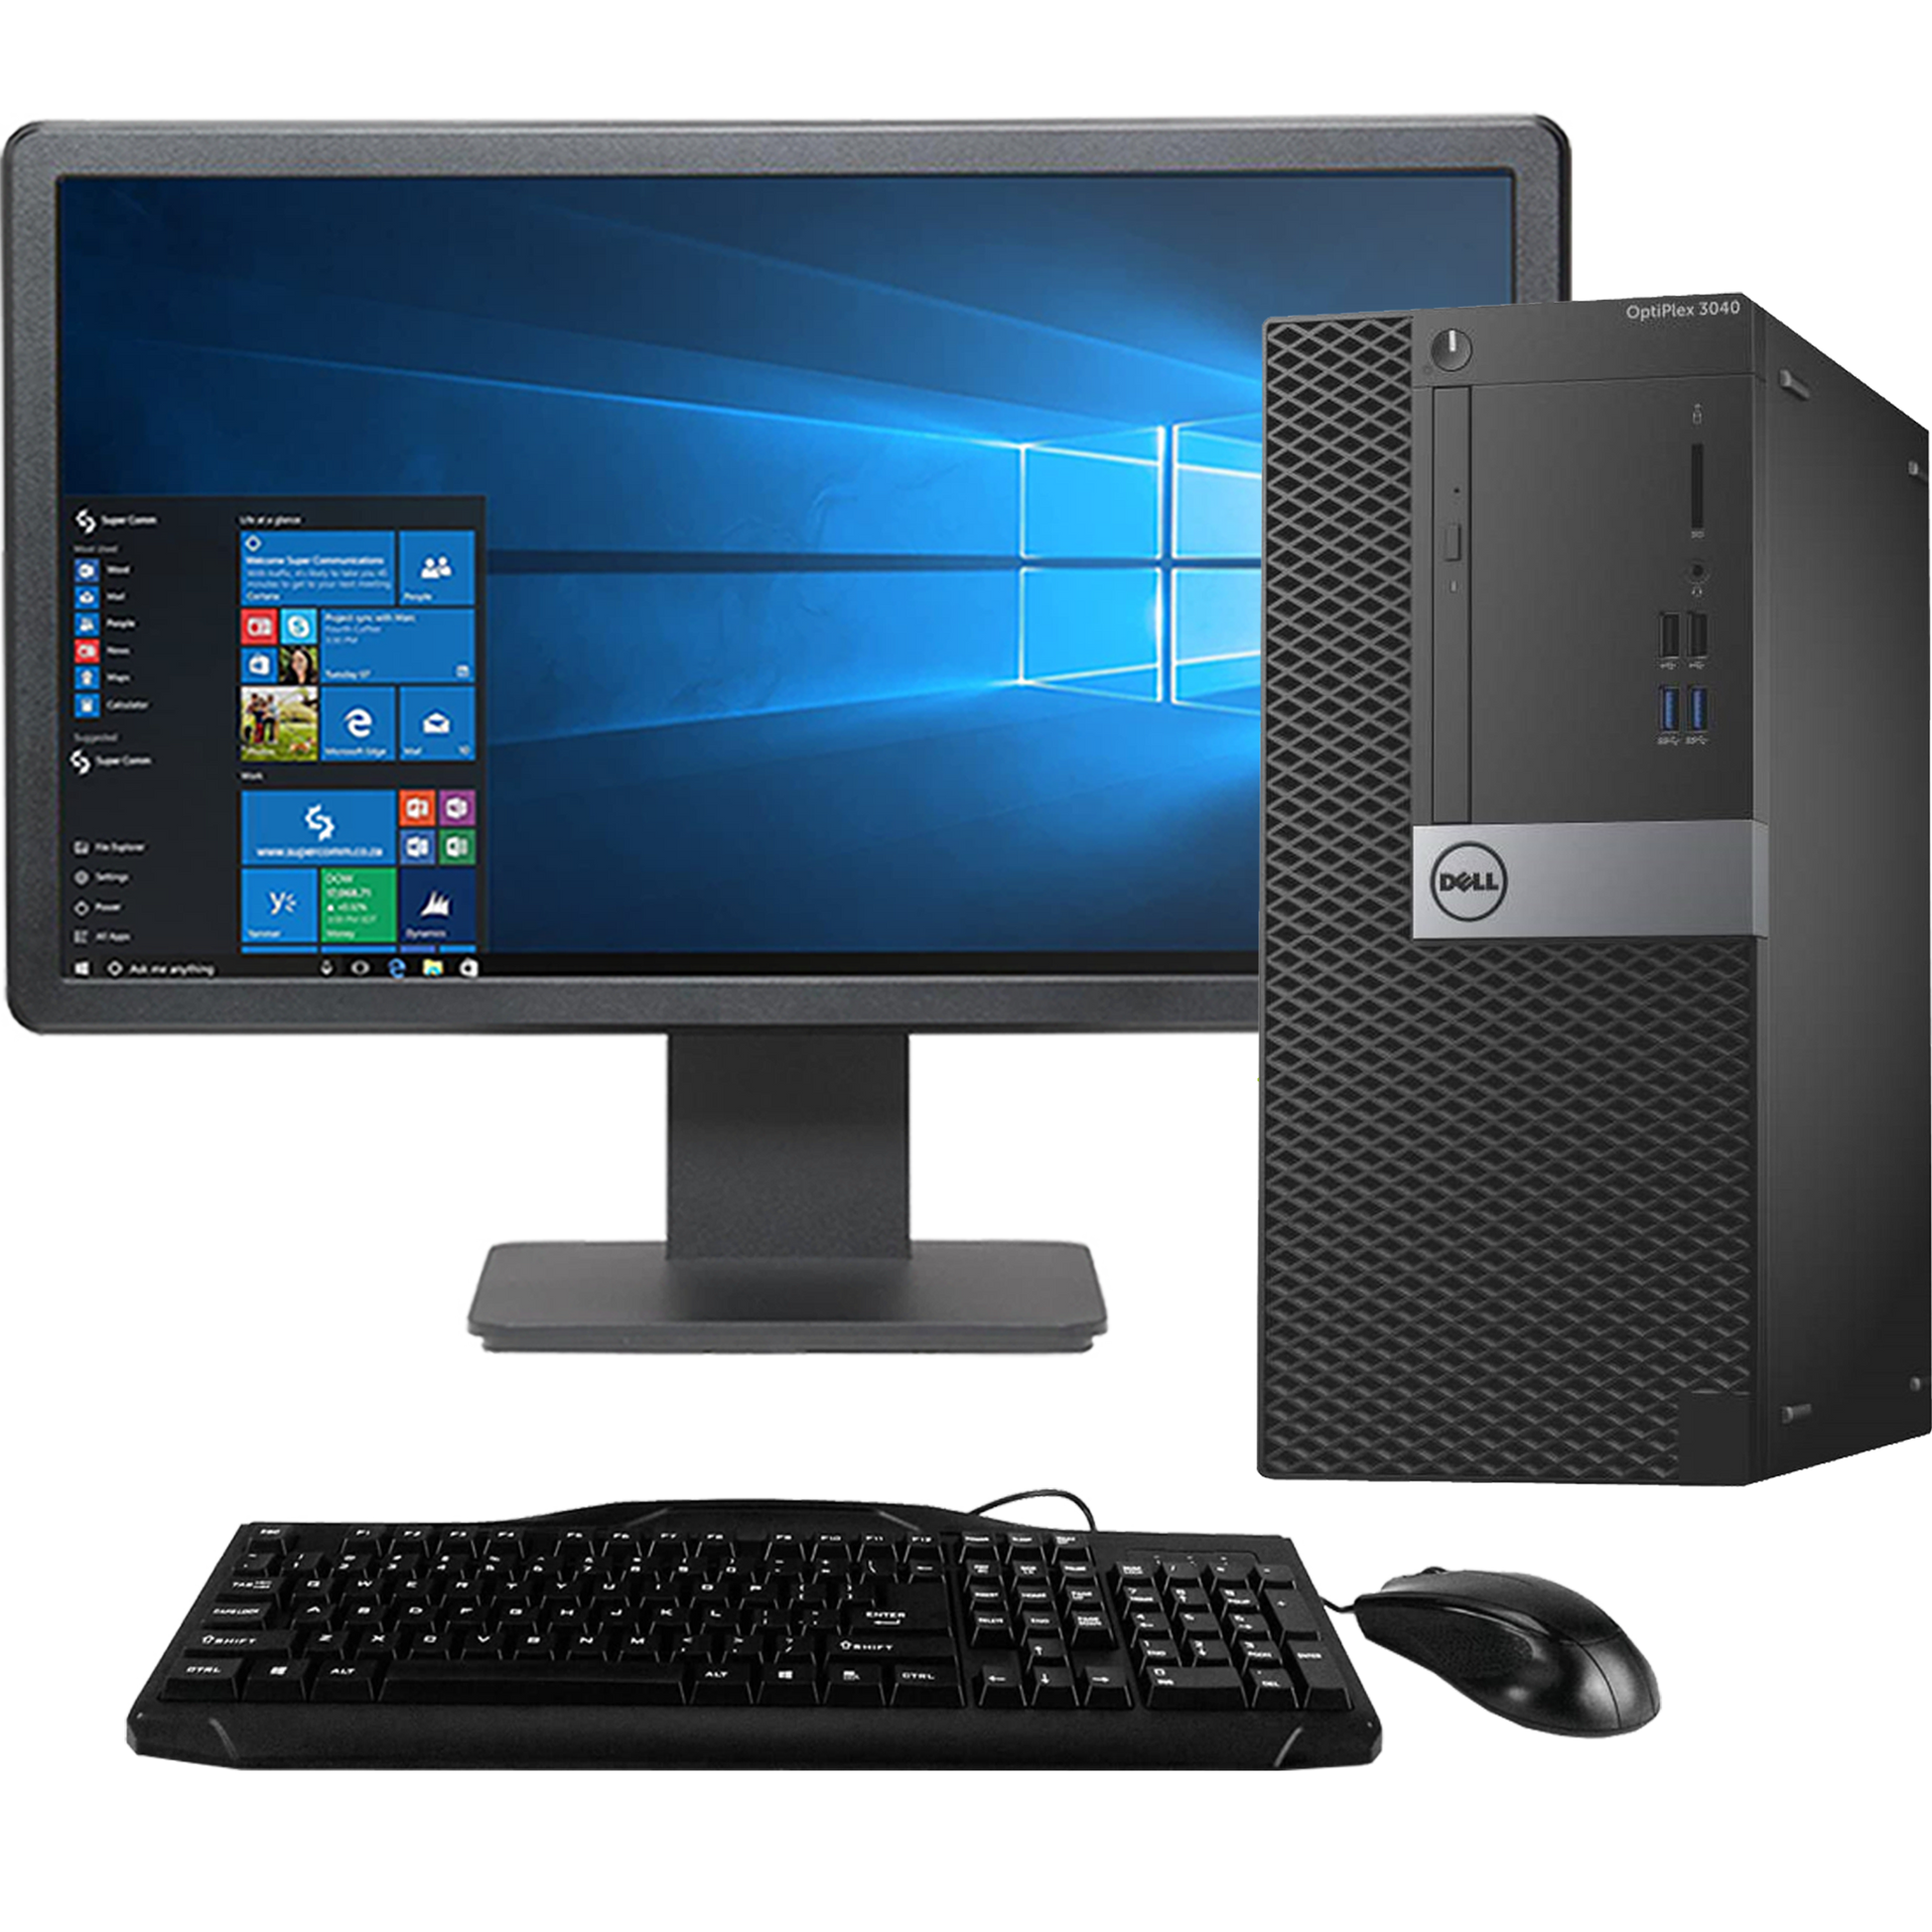 Dell OptiPlex 3040 Intel i5, 6th Gen Tower PC with 20" Monitor Desktop Computers